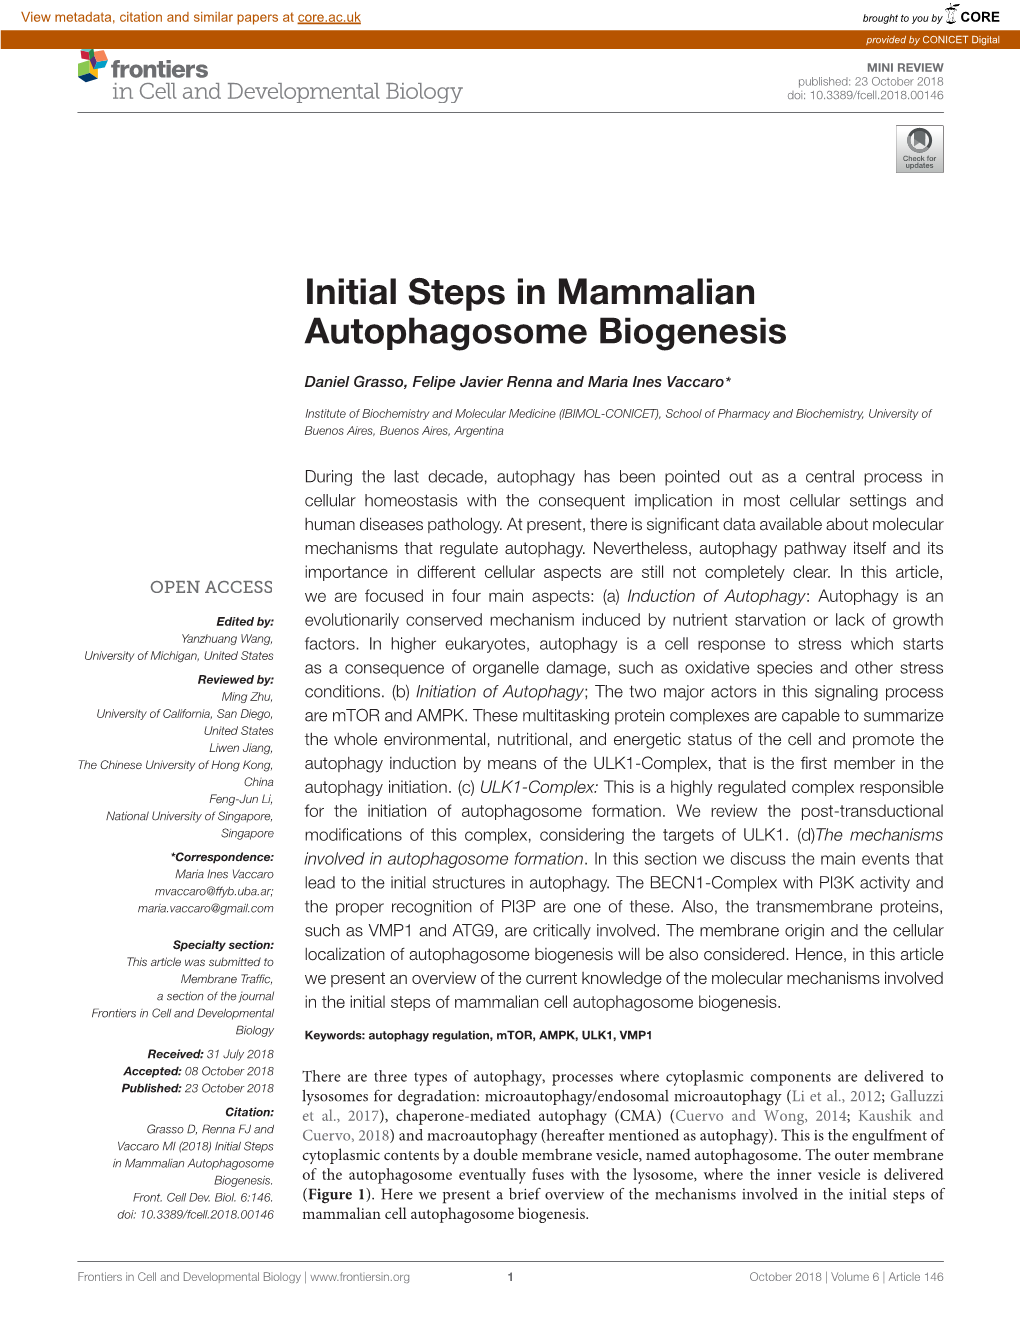 Initial Steps in Mammalian Autophagosome Biogenesis